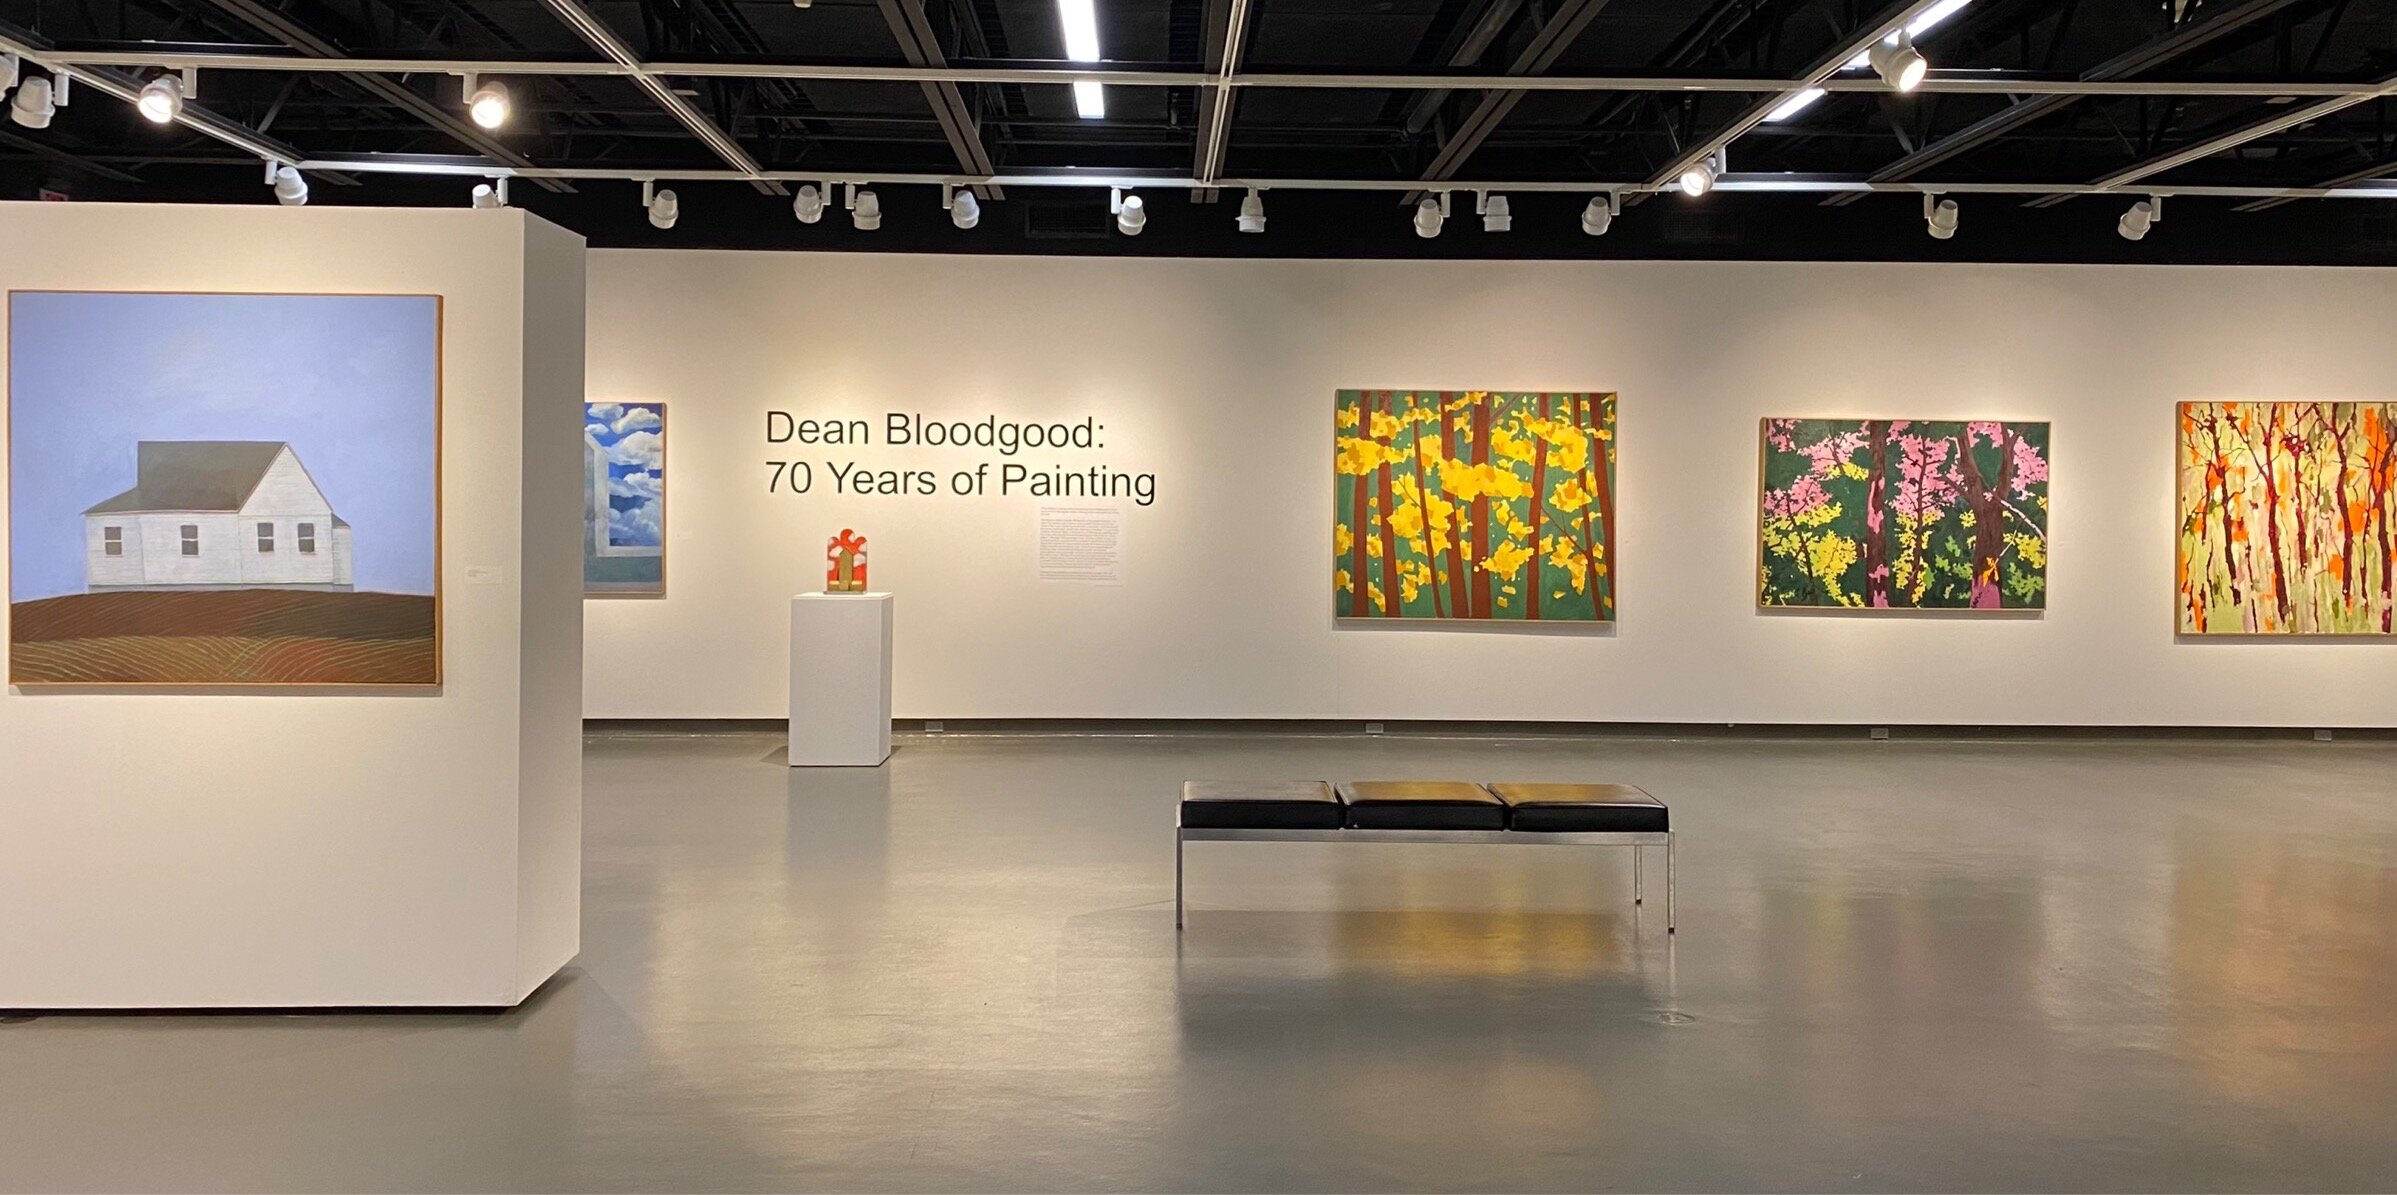 Dean Bloodgood: 70 Years of Painting, Nona Jean Hulsey Gallery at OKCU